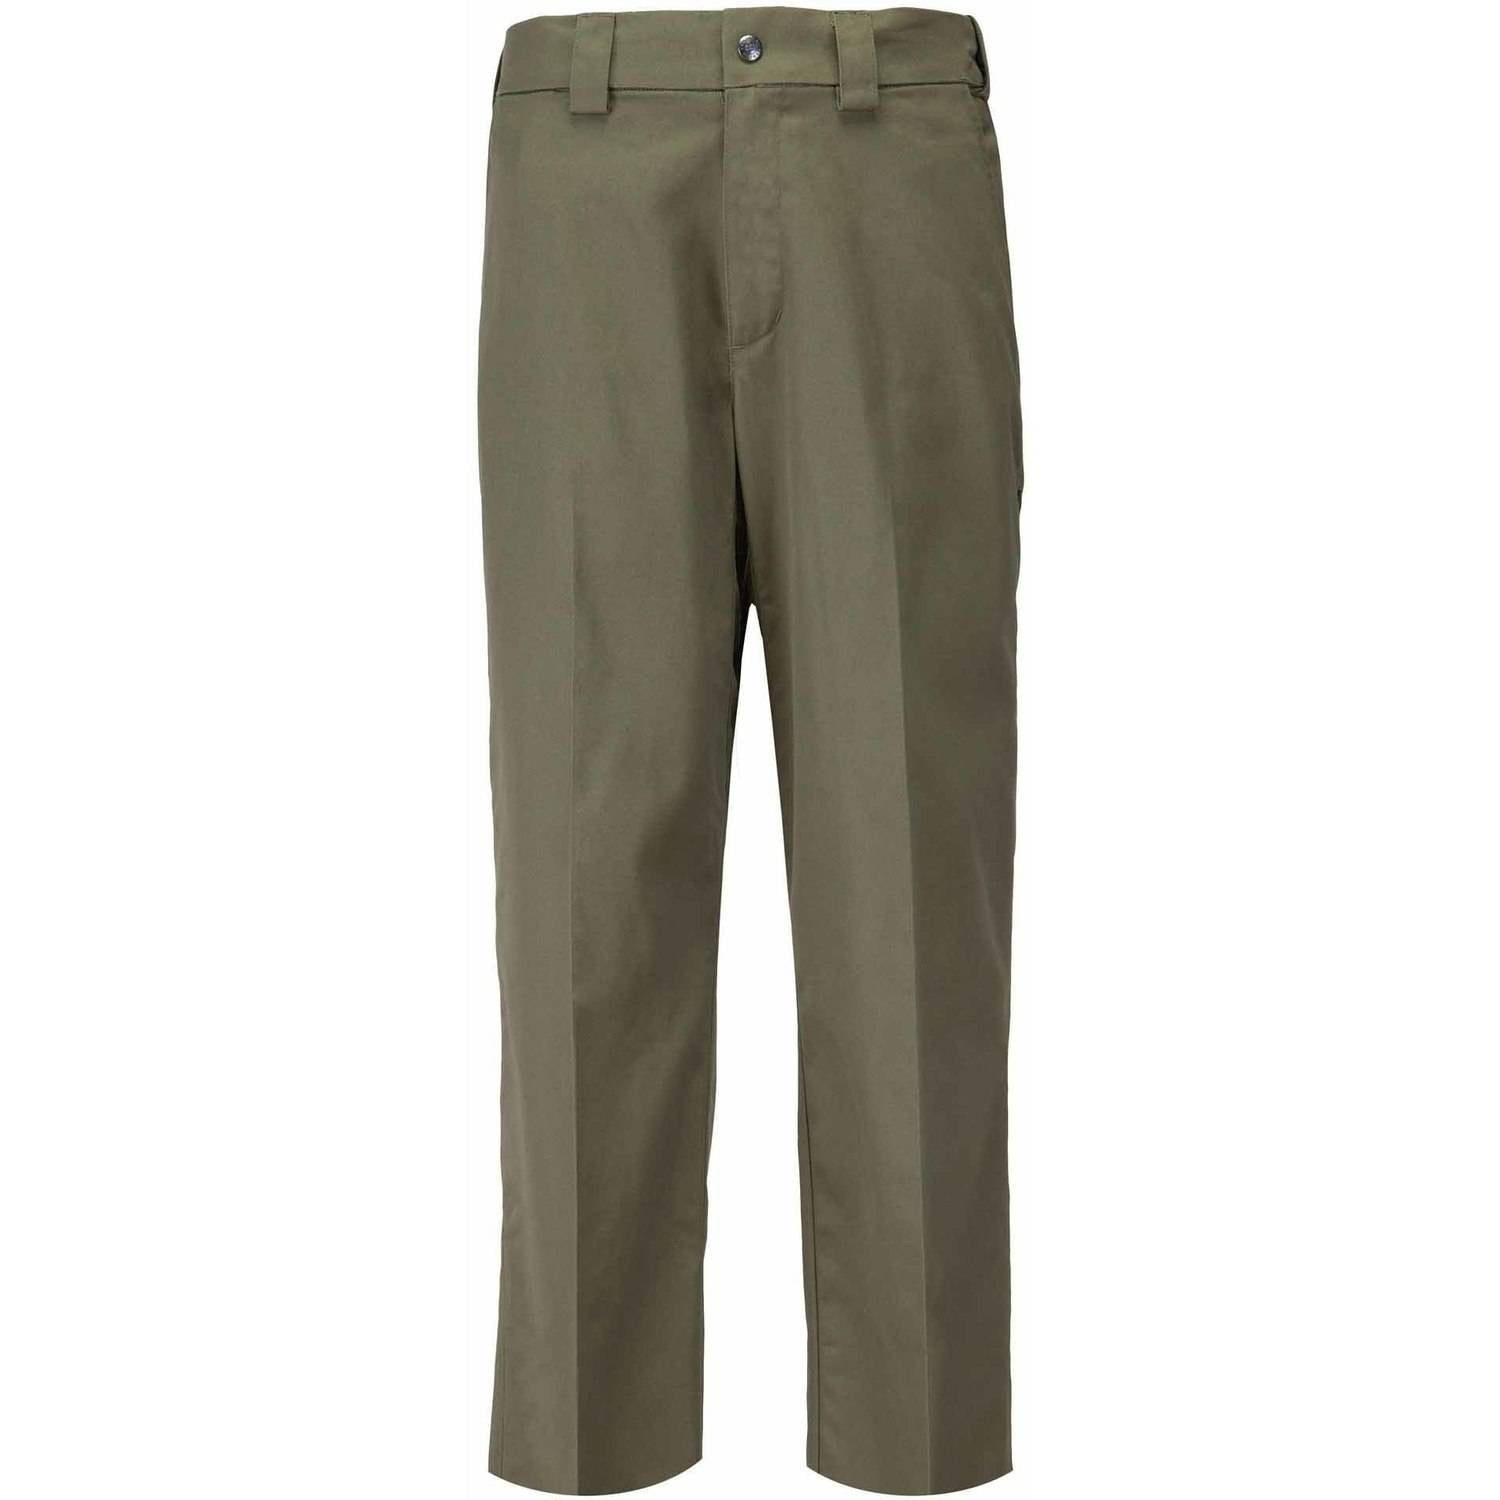 Men's Twill PDU Class-A Pants, Sheriff Green - Walmart.com